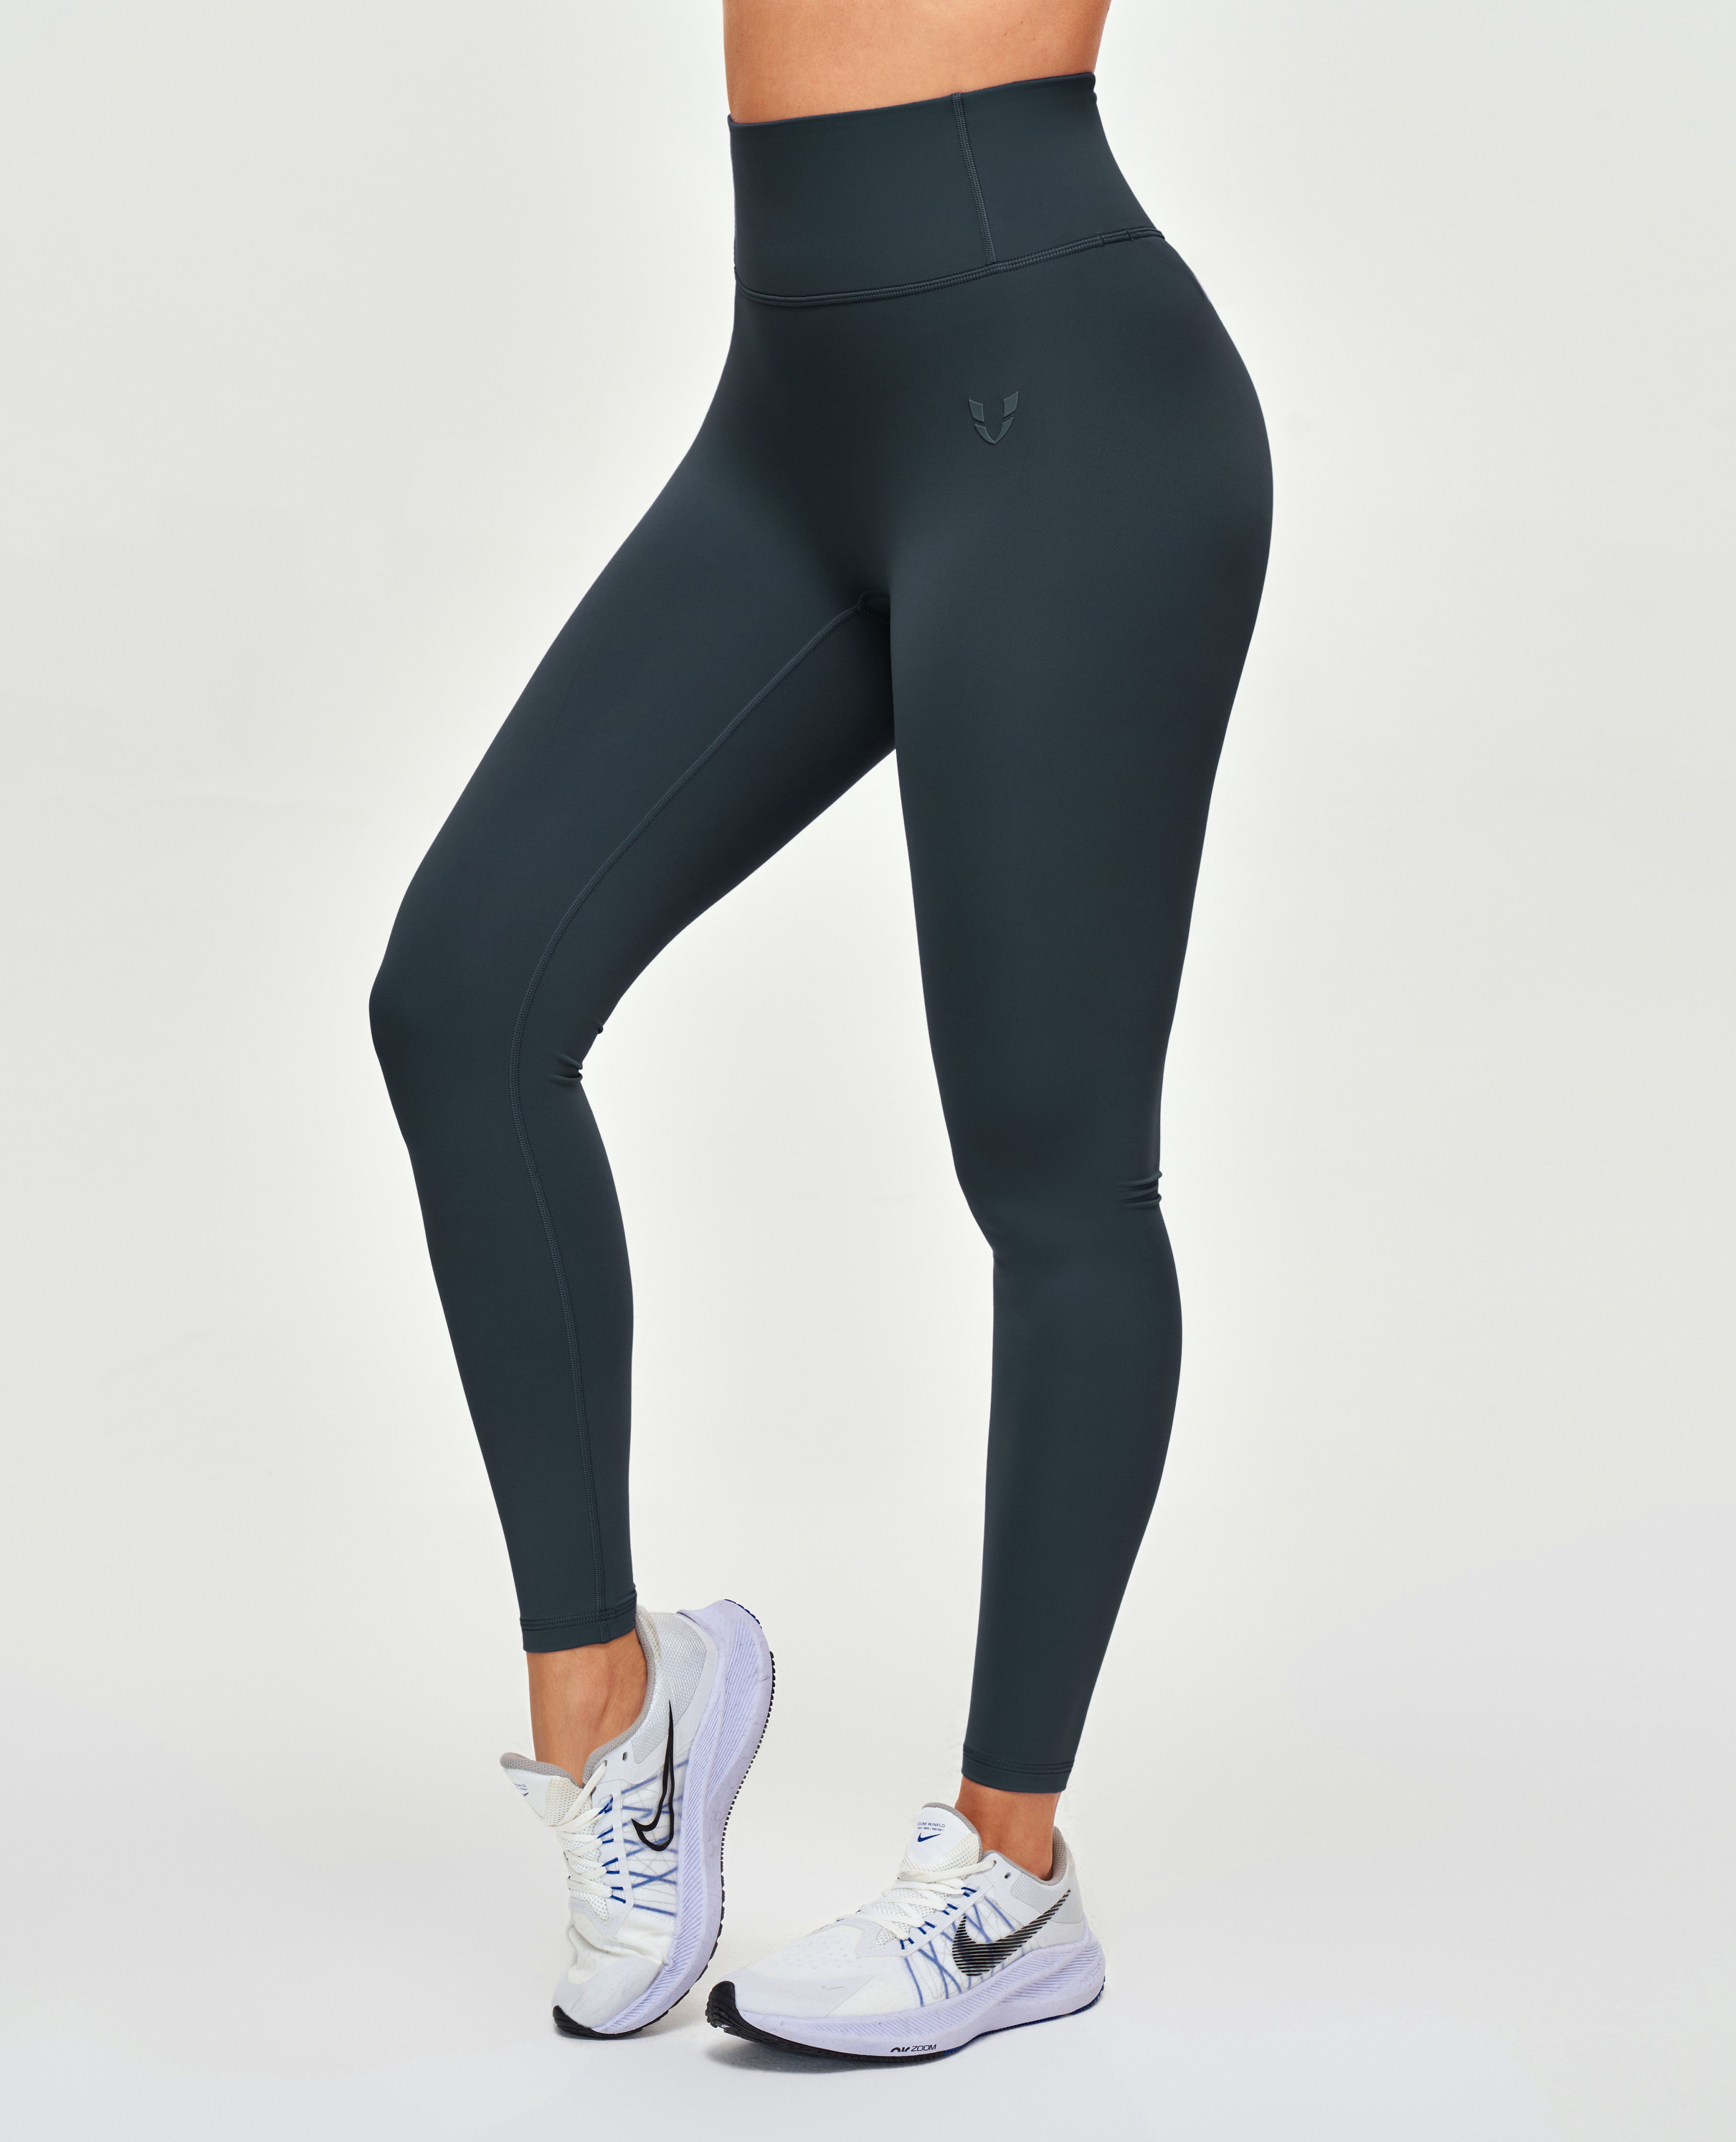 Women's Workout Leggings